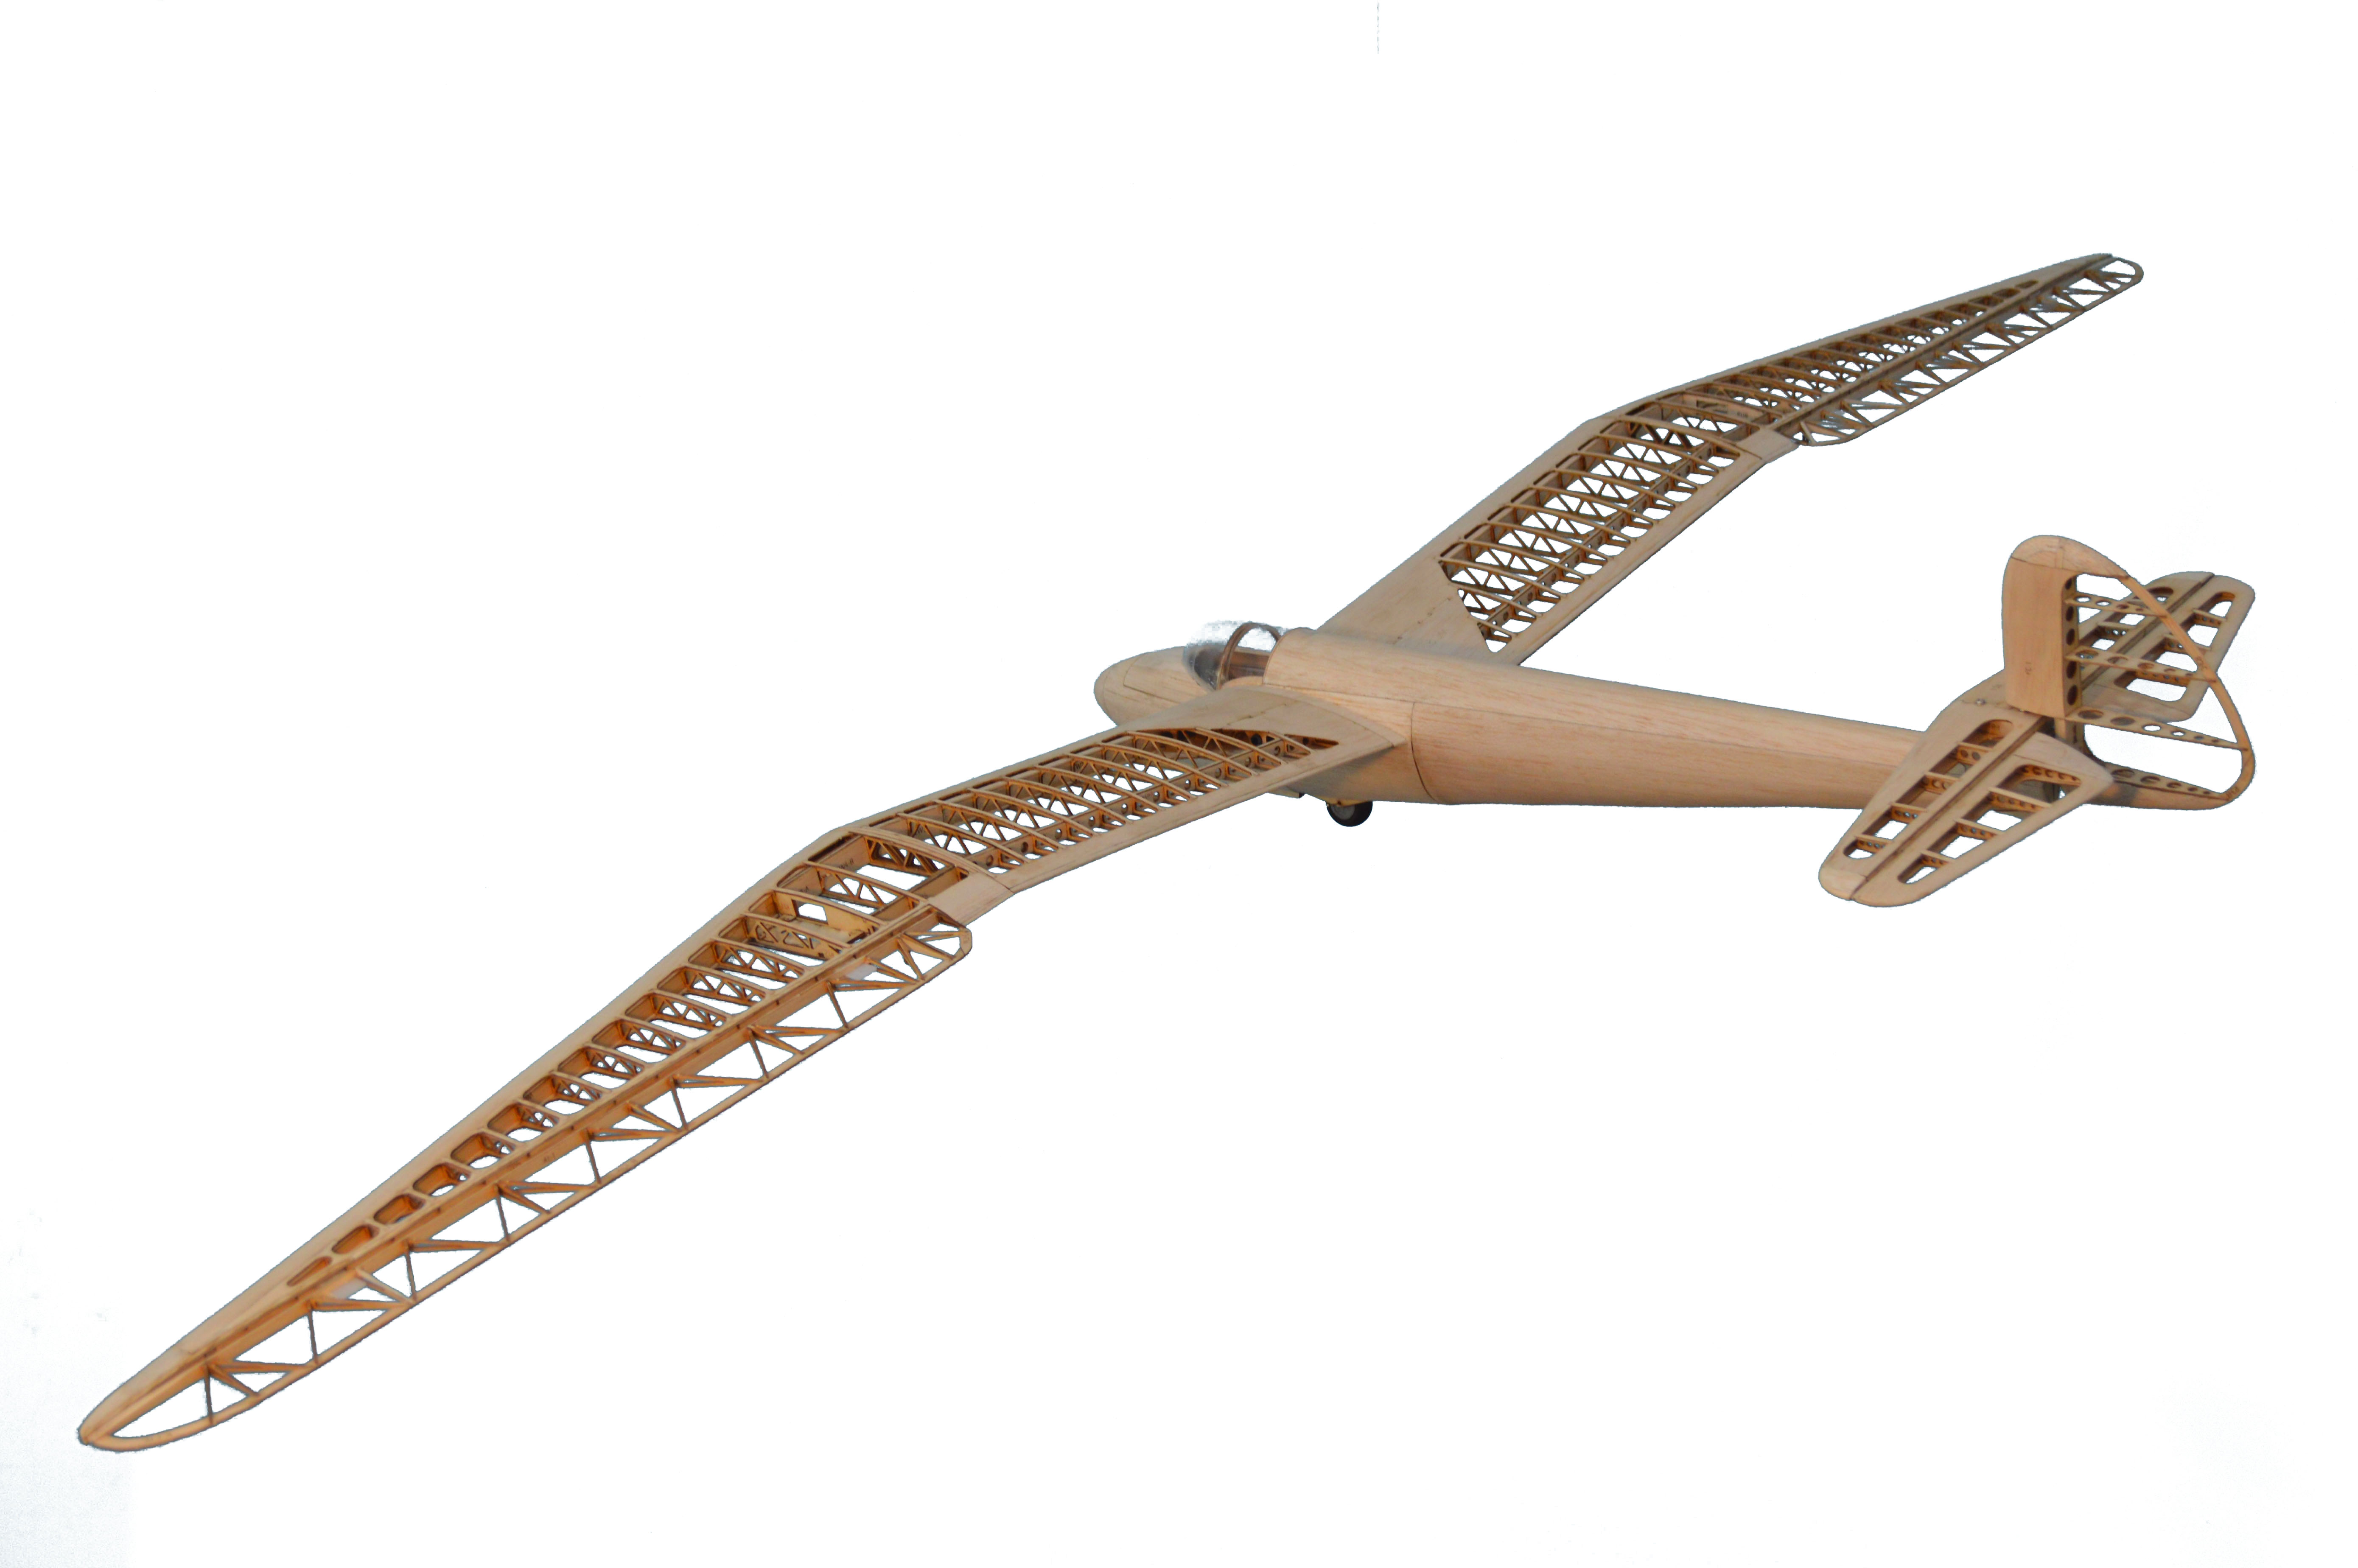 Tony-Rays-AeroModel-Minimoa-1422mm-Wingspan-112-Scale-Balsa-Wood-Laser-Cut-RC-Airplane-Glider-KIT-1802443-3